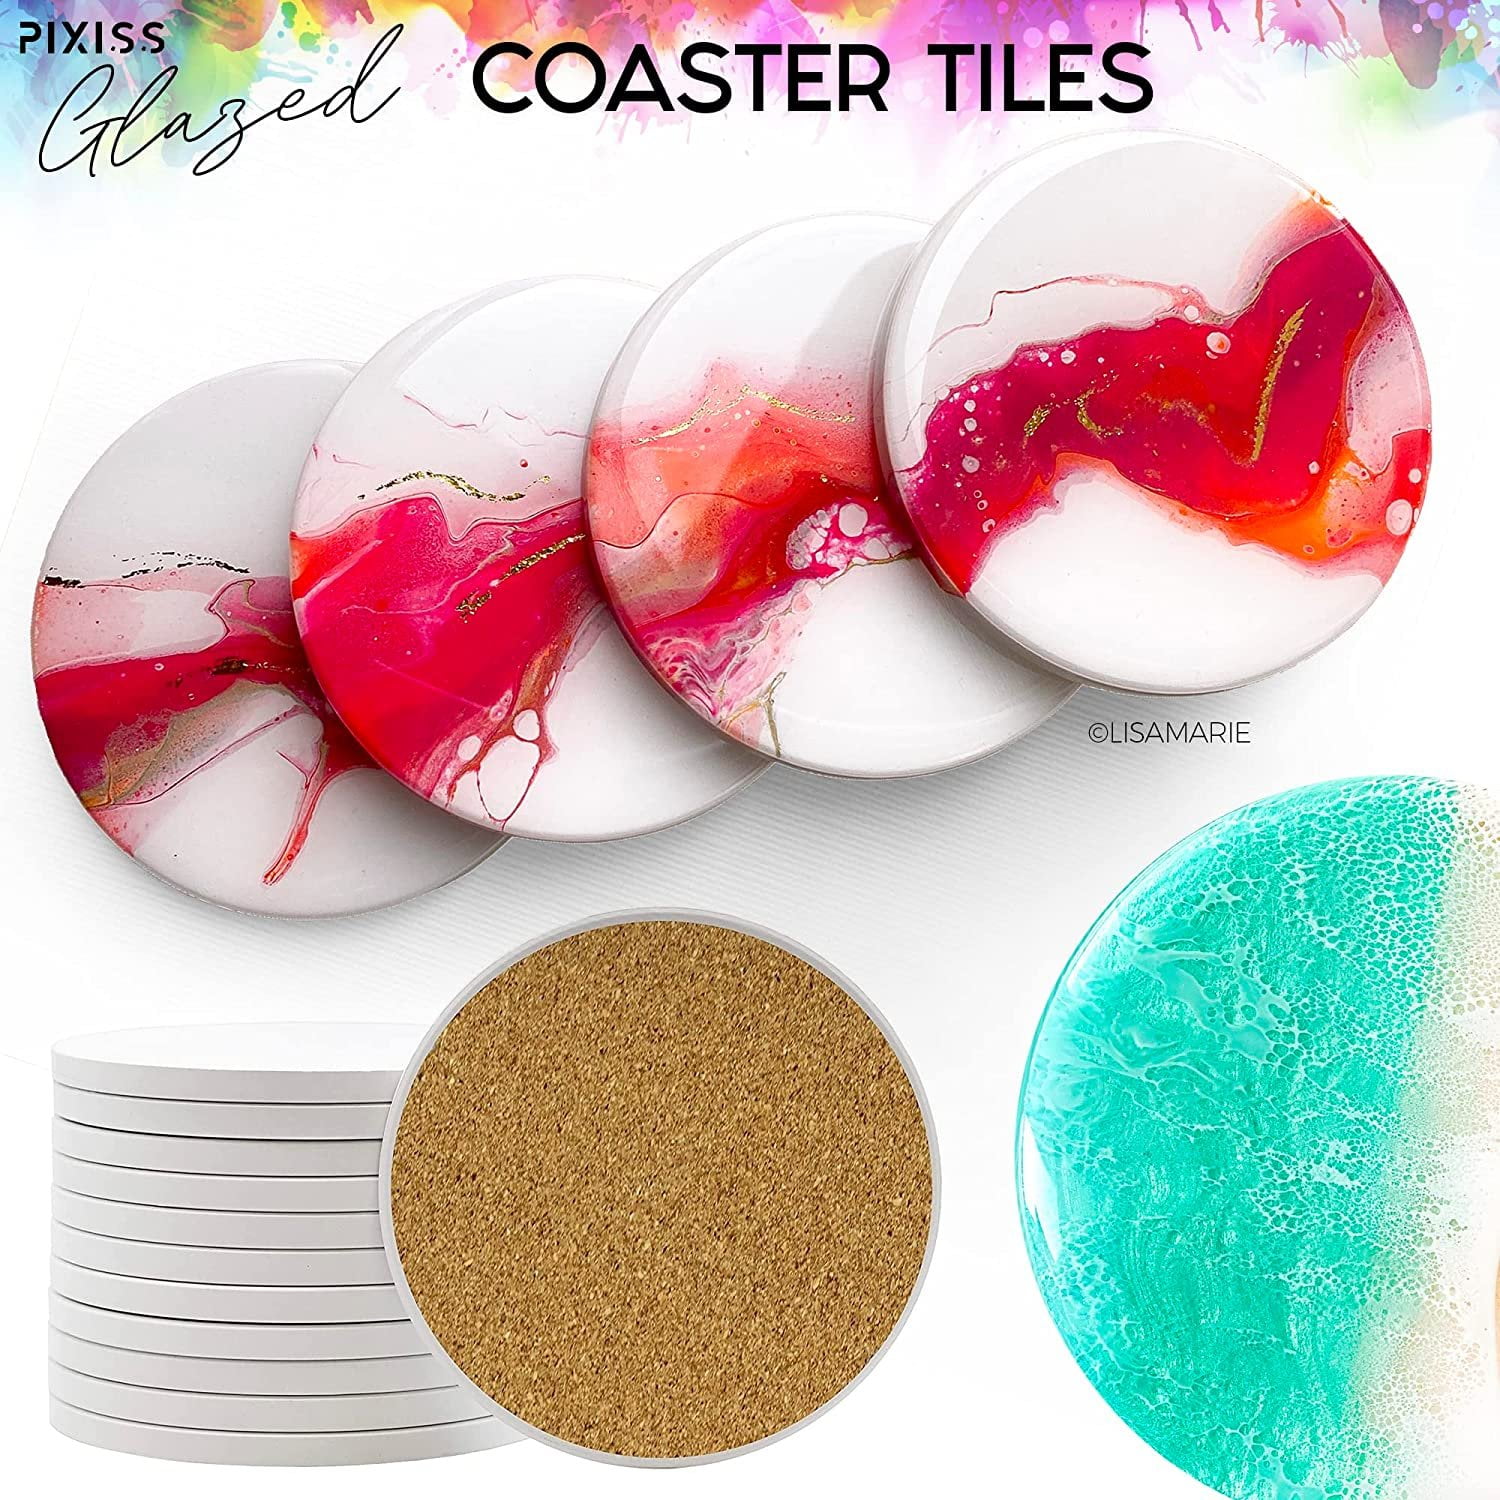 Big Night Tile Coasters (Set of 2)